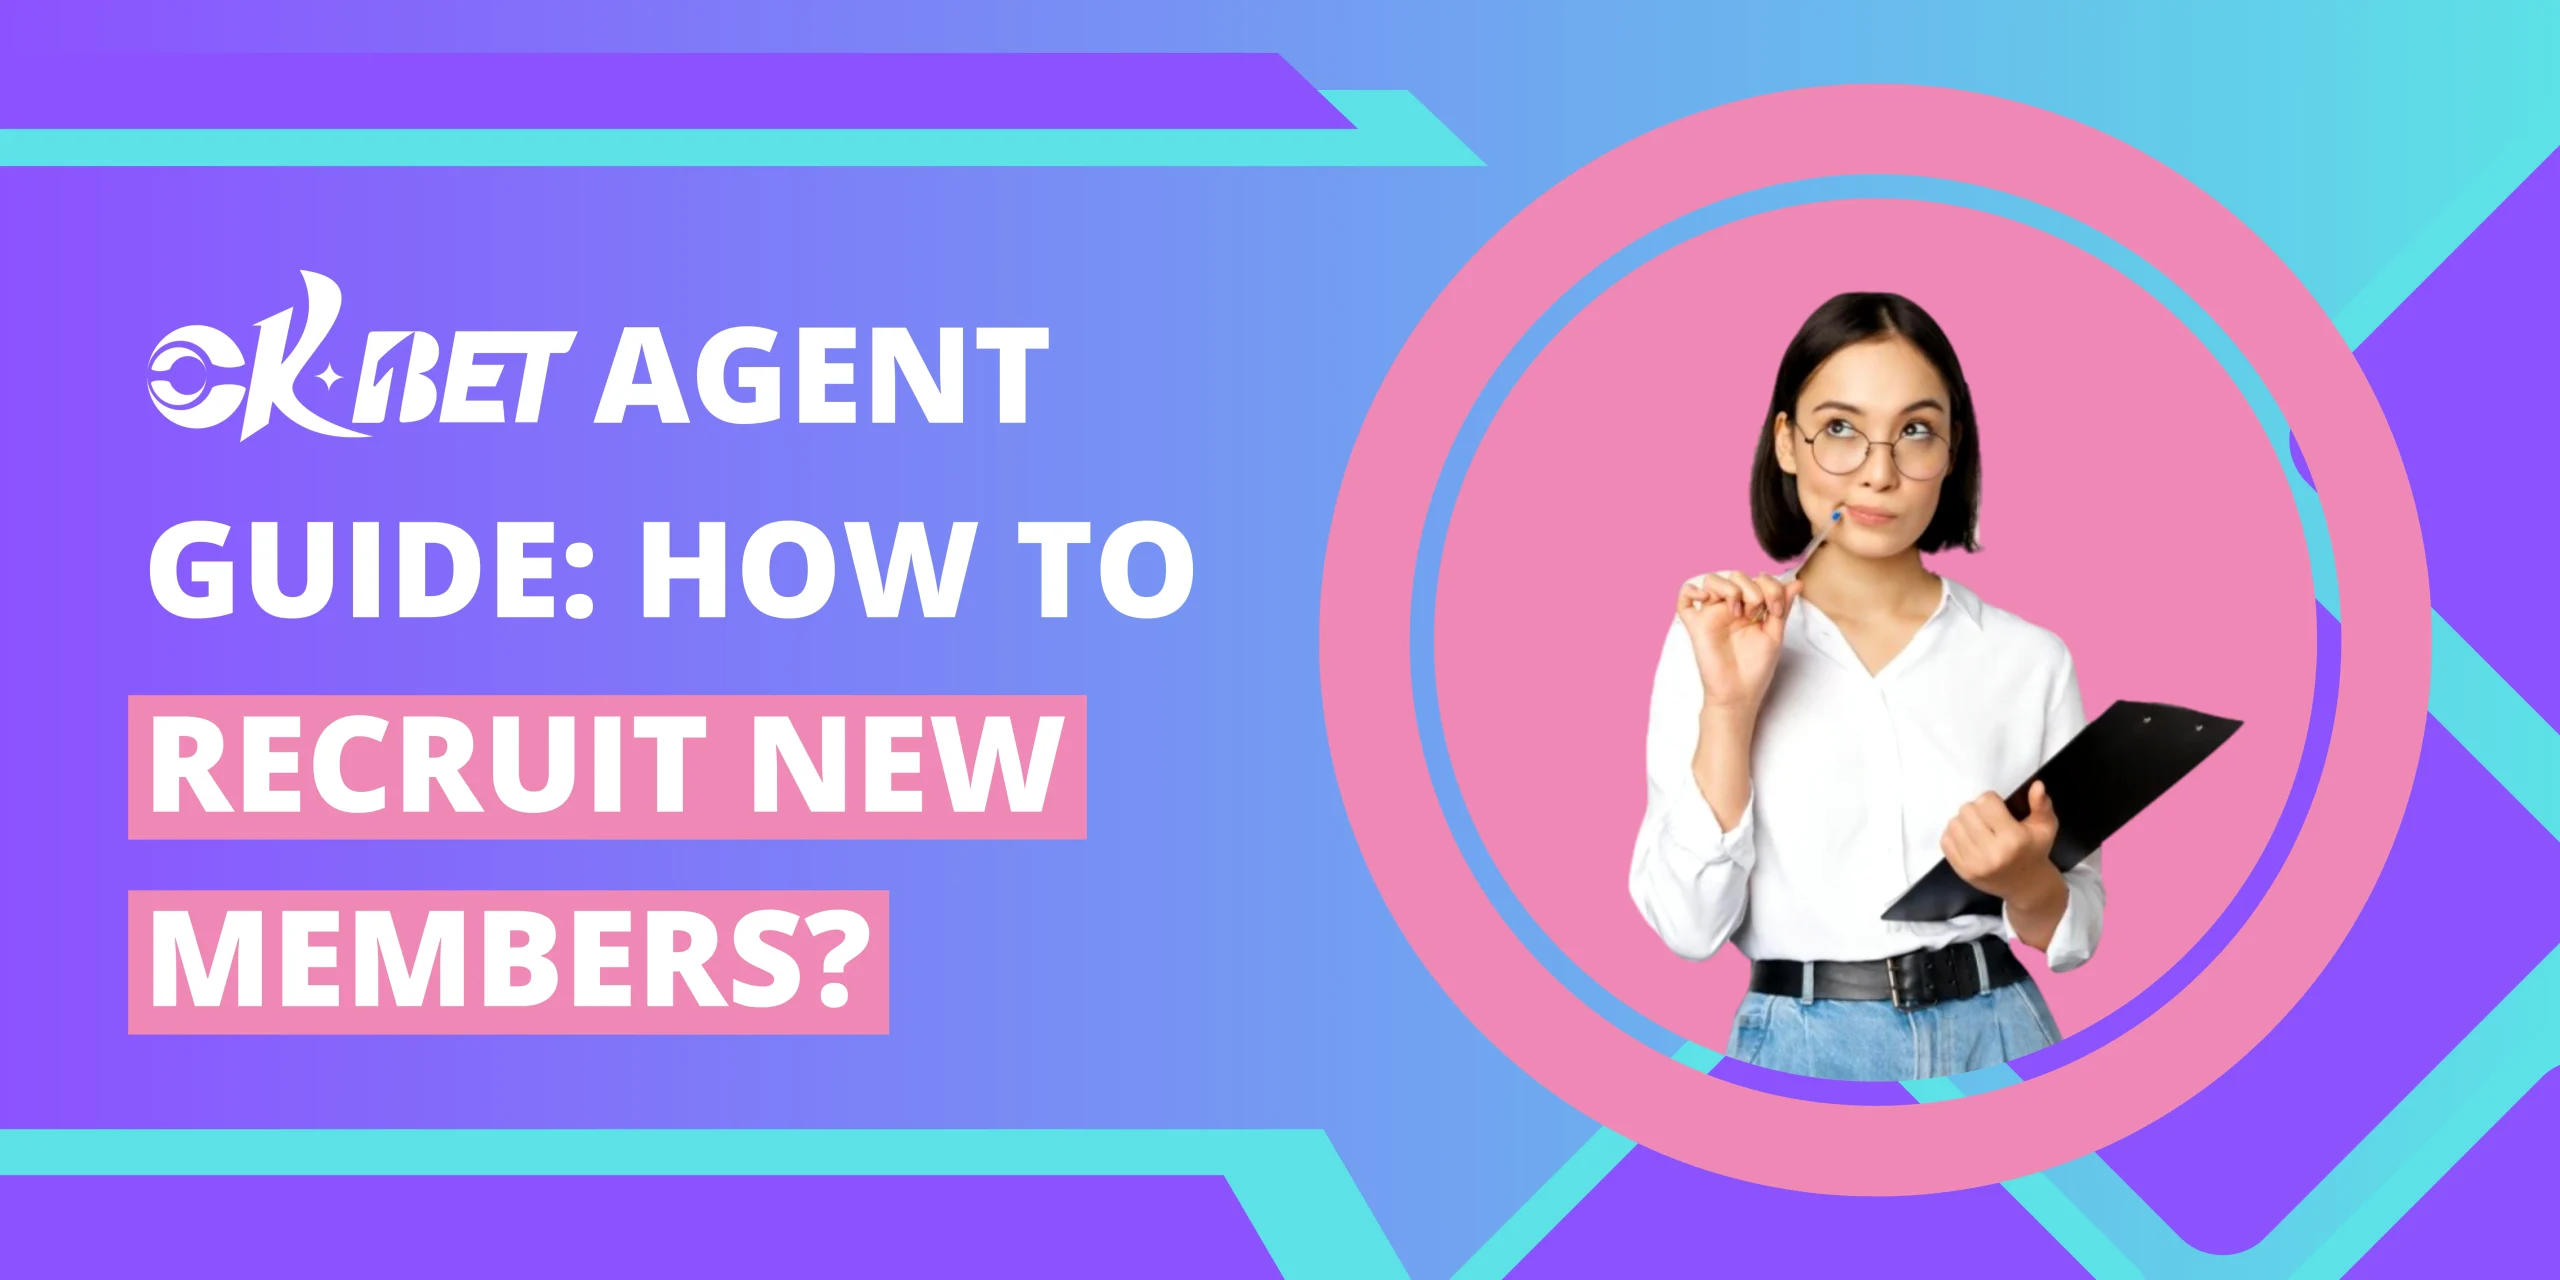 OKBet AGENT Guide: How To Recruit New Members?